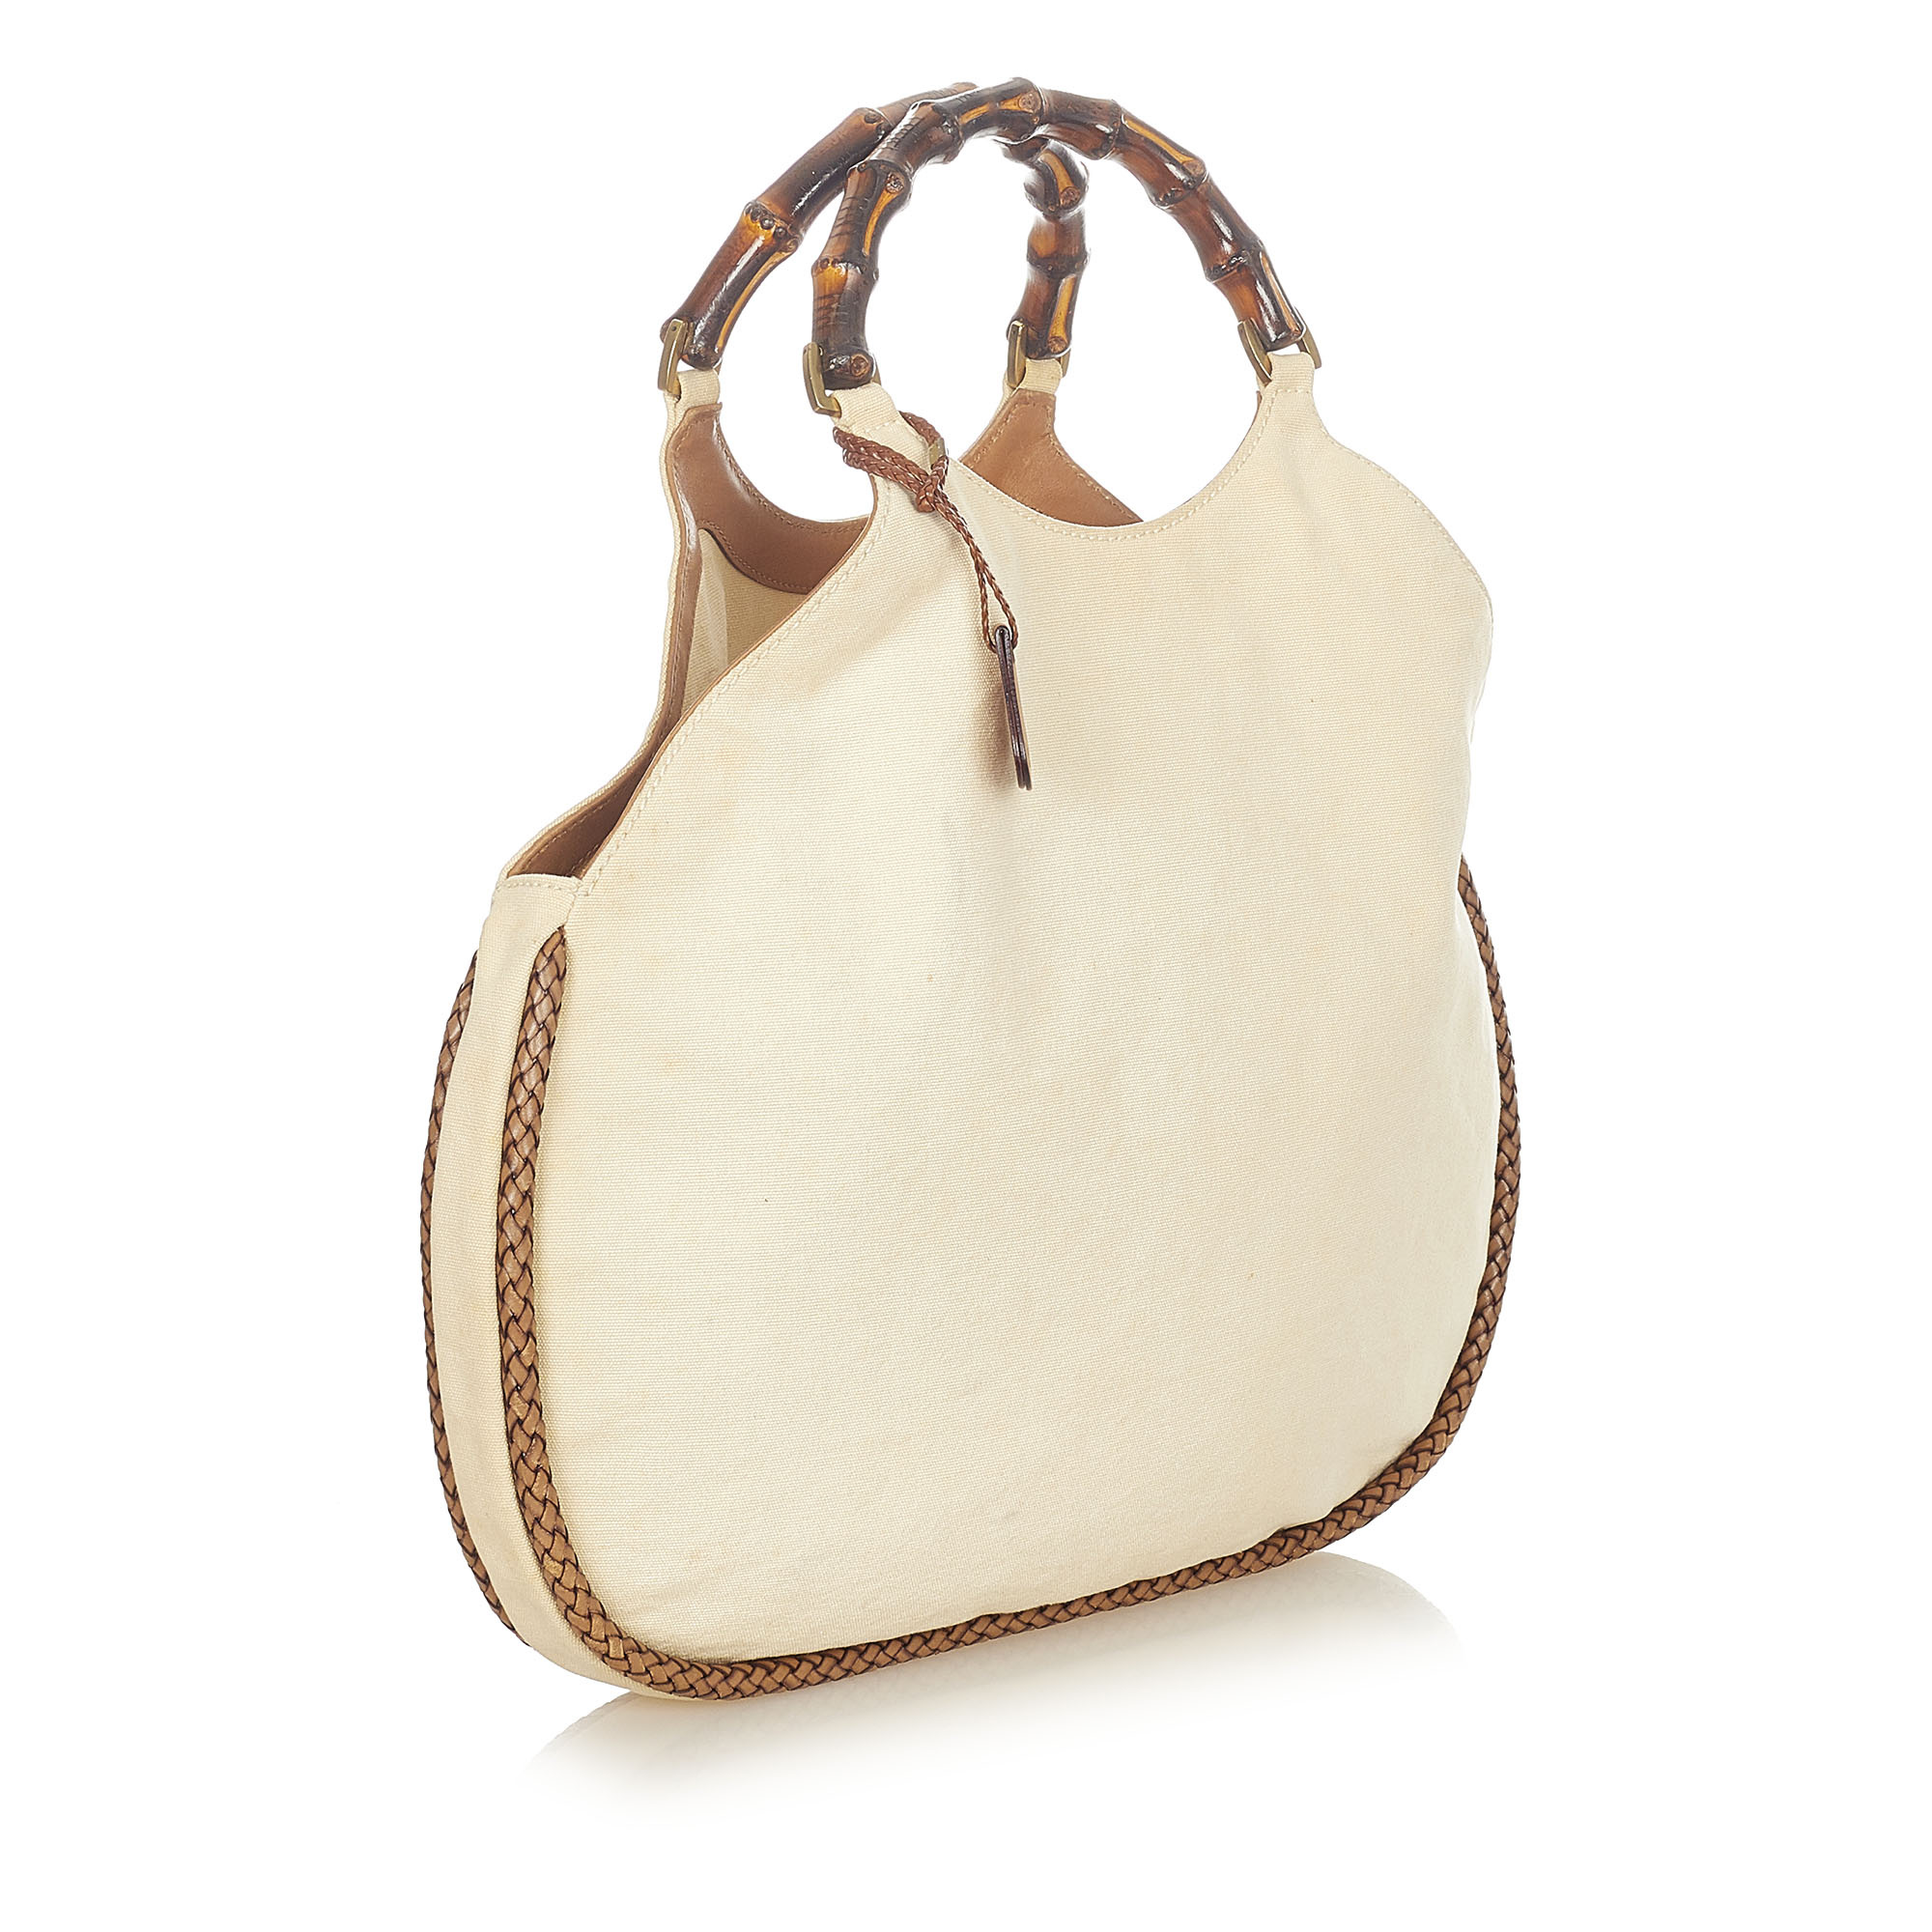 Gucci Diana | Gucci bamboo bag, Bags, Bags designer fashion